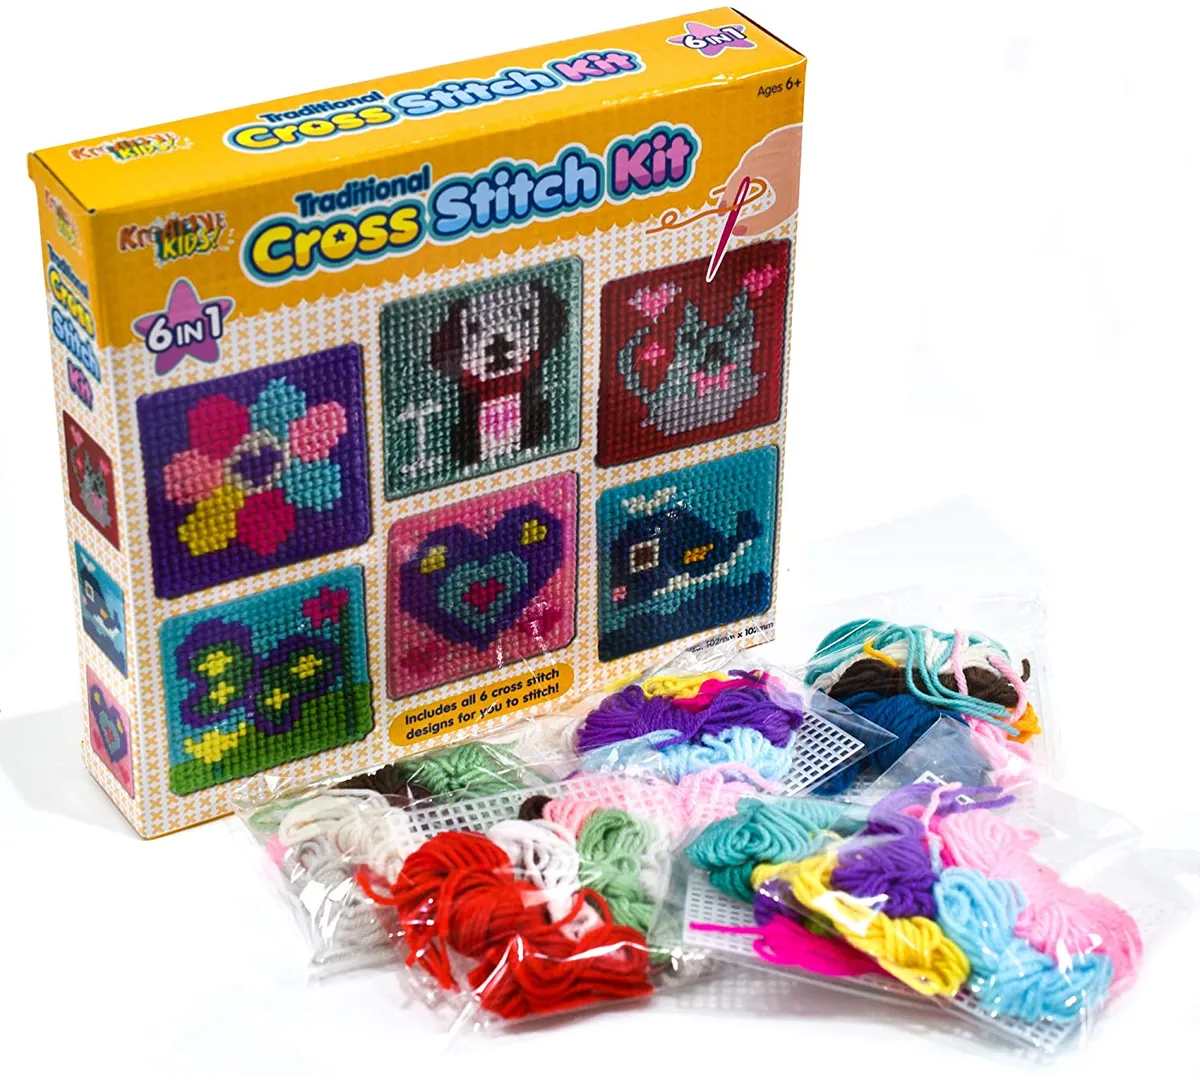 https://c02.purpledshub.com/uploads/sites/51/2021/03/cross-stitch-kits-for-kids-b37285c.jpg?webp=1&w=1200